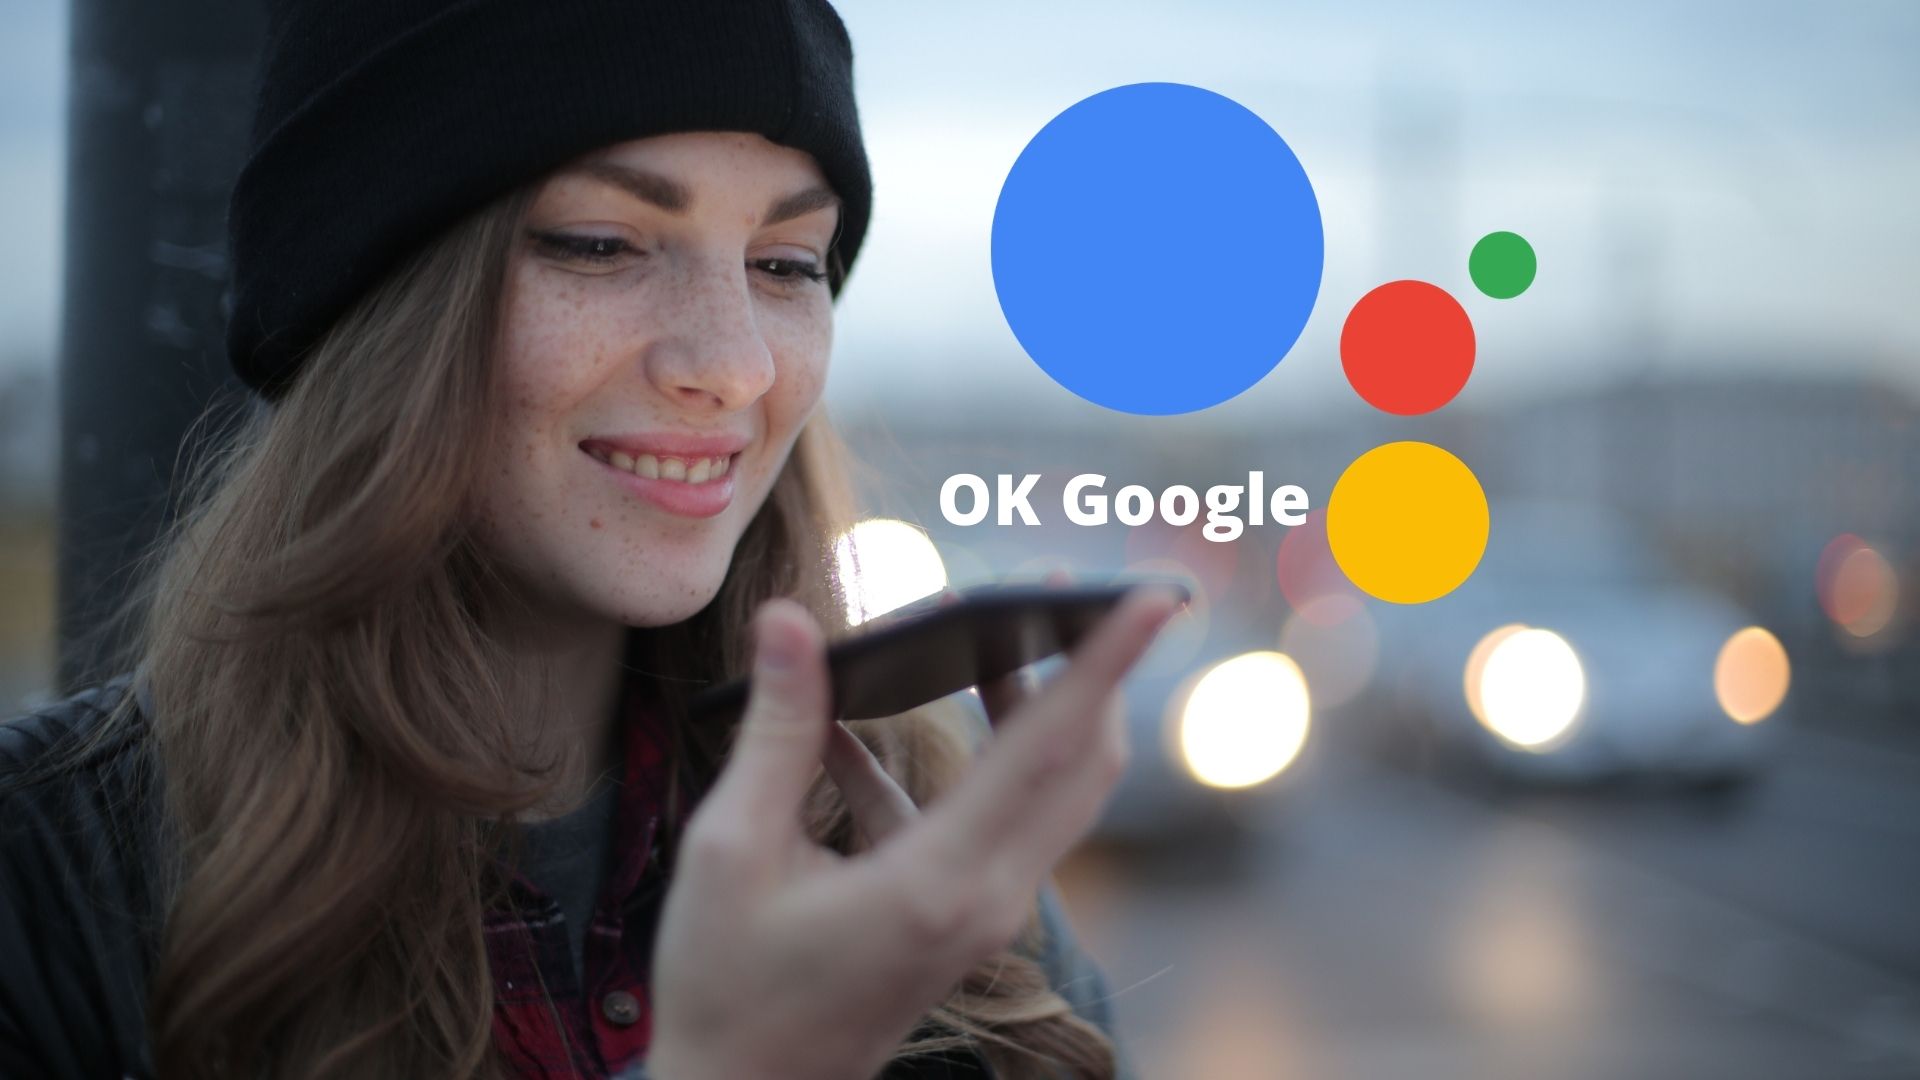 send audio messages using Google Assistant